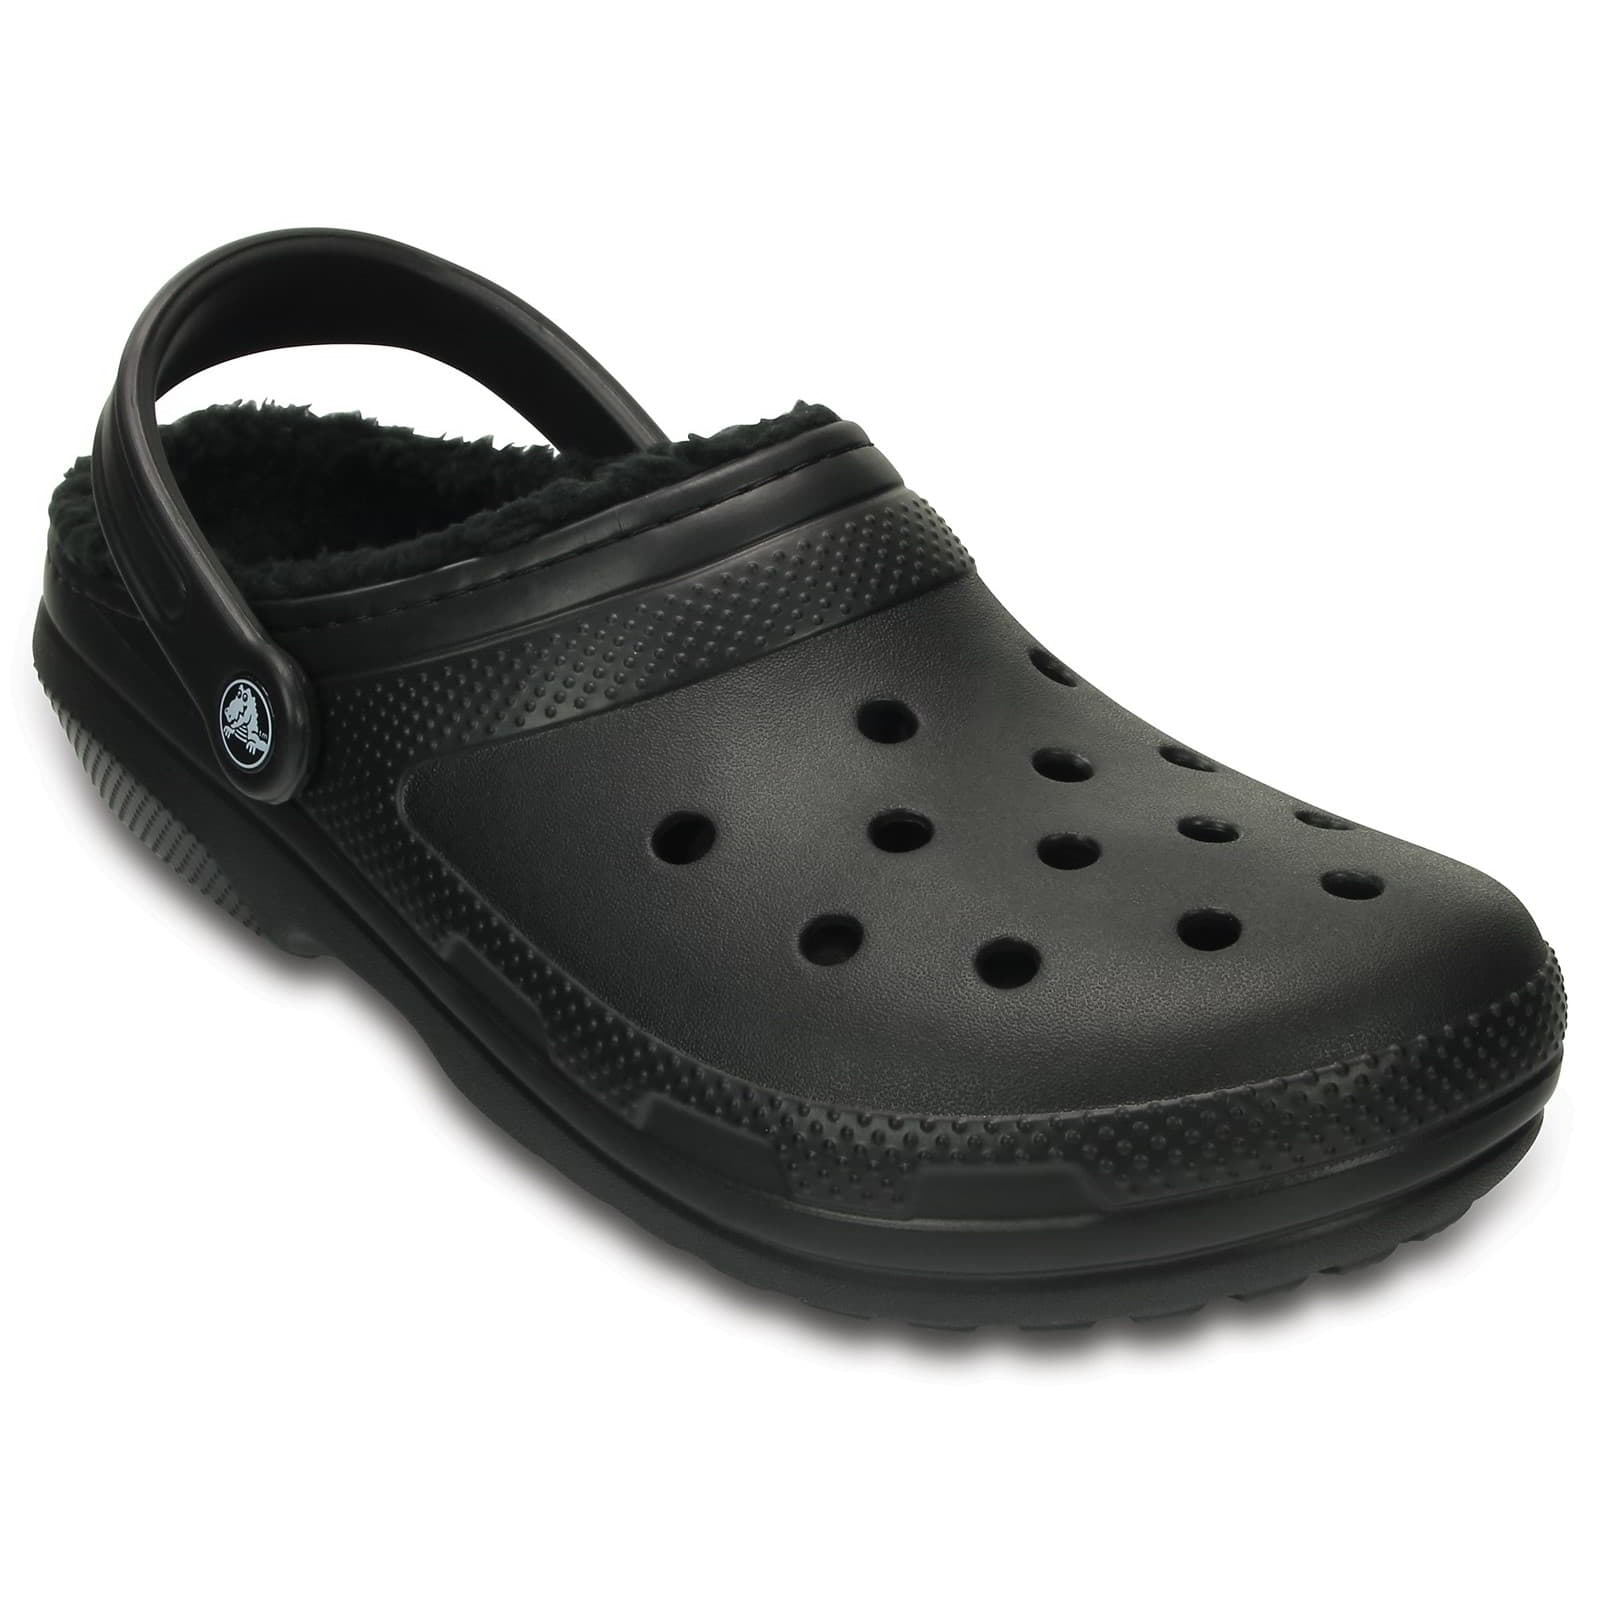 Crocs Men's Women's Classic Lined Clogs Slip On Slippers Shoes - UK 6